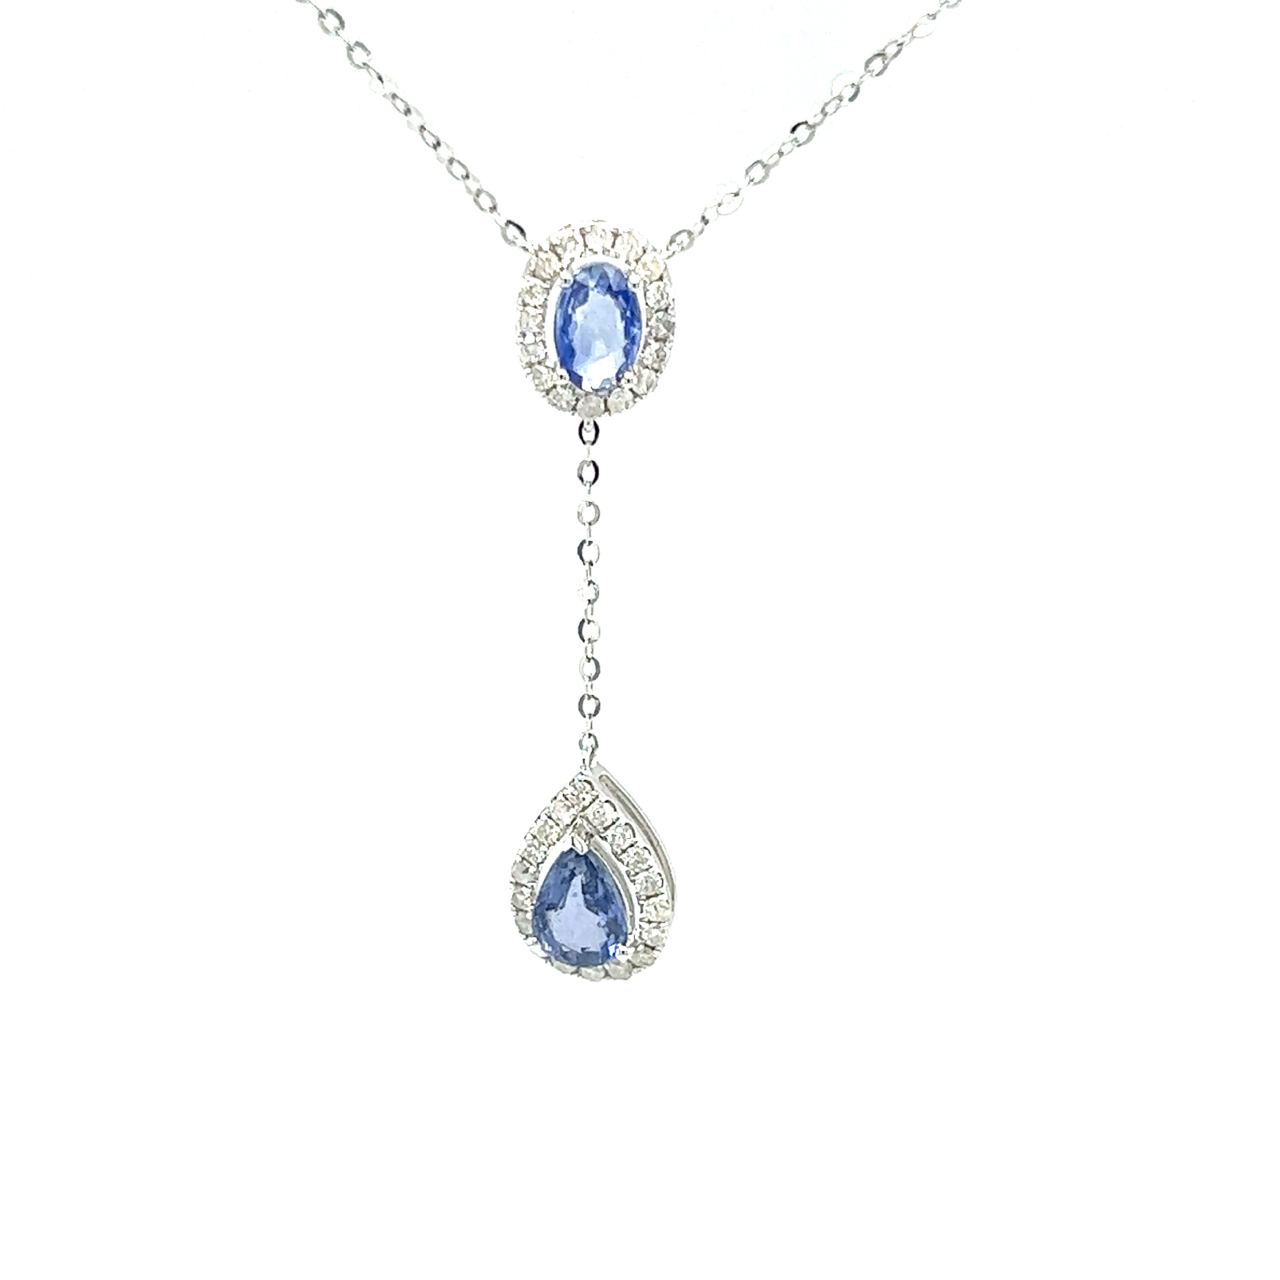 18K White Gold Blue Sap Lariat Diamond Necklace